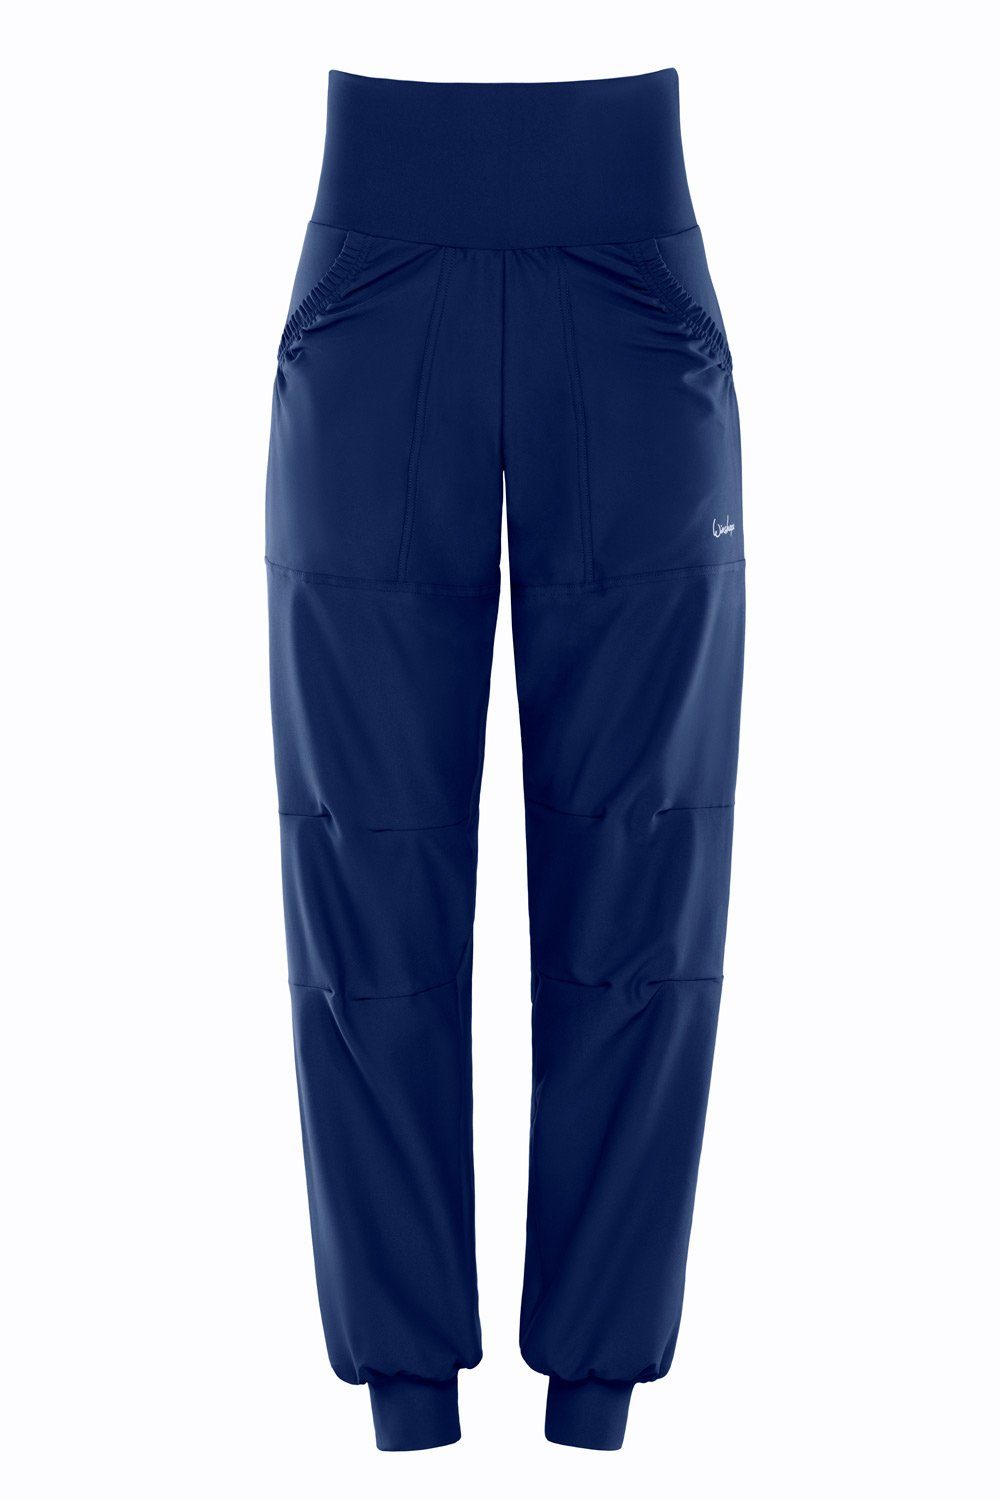 Winshape Sporthose Functional Comfort Leisure Time Trousers LEI101C High Waist dark blue